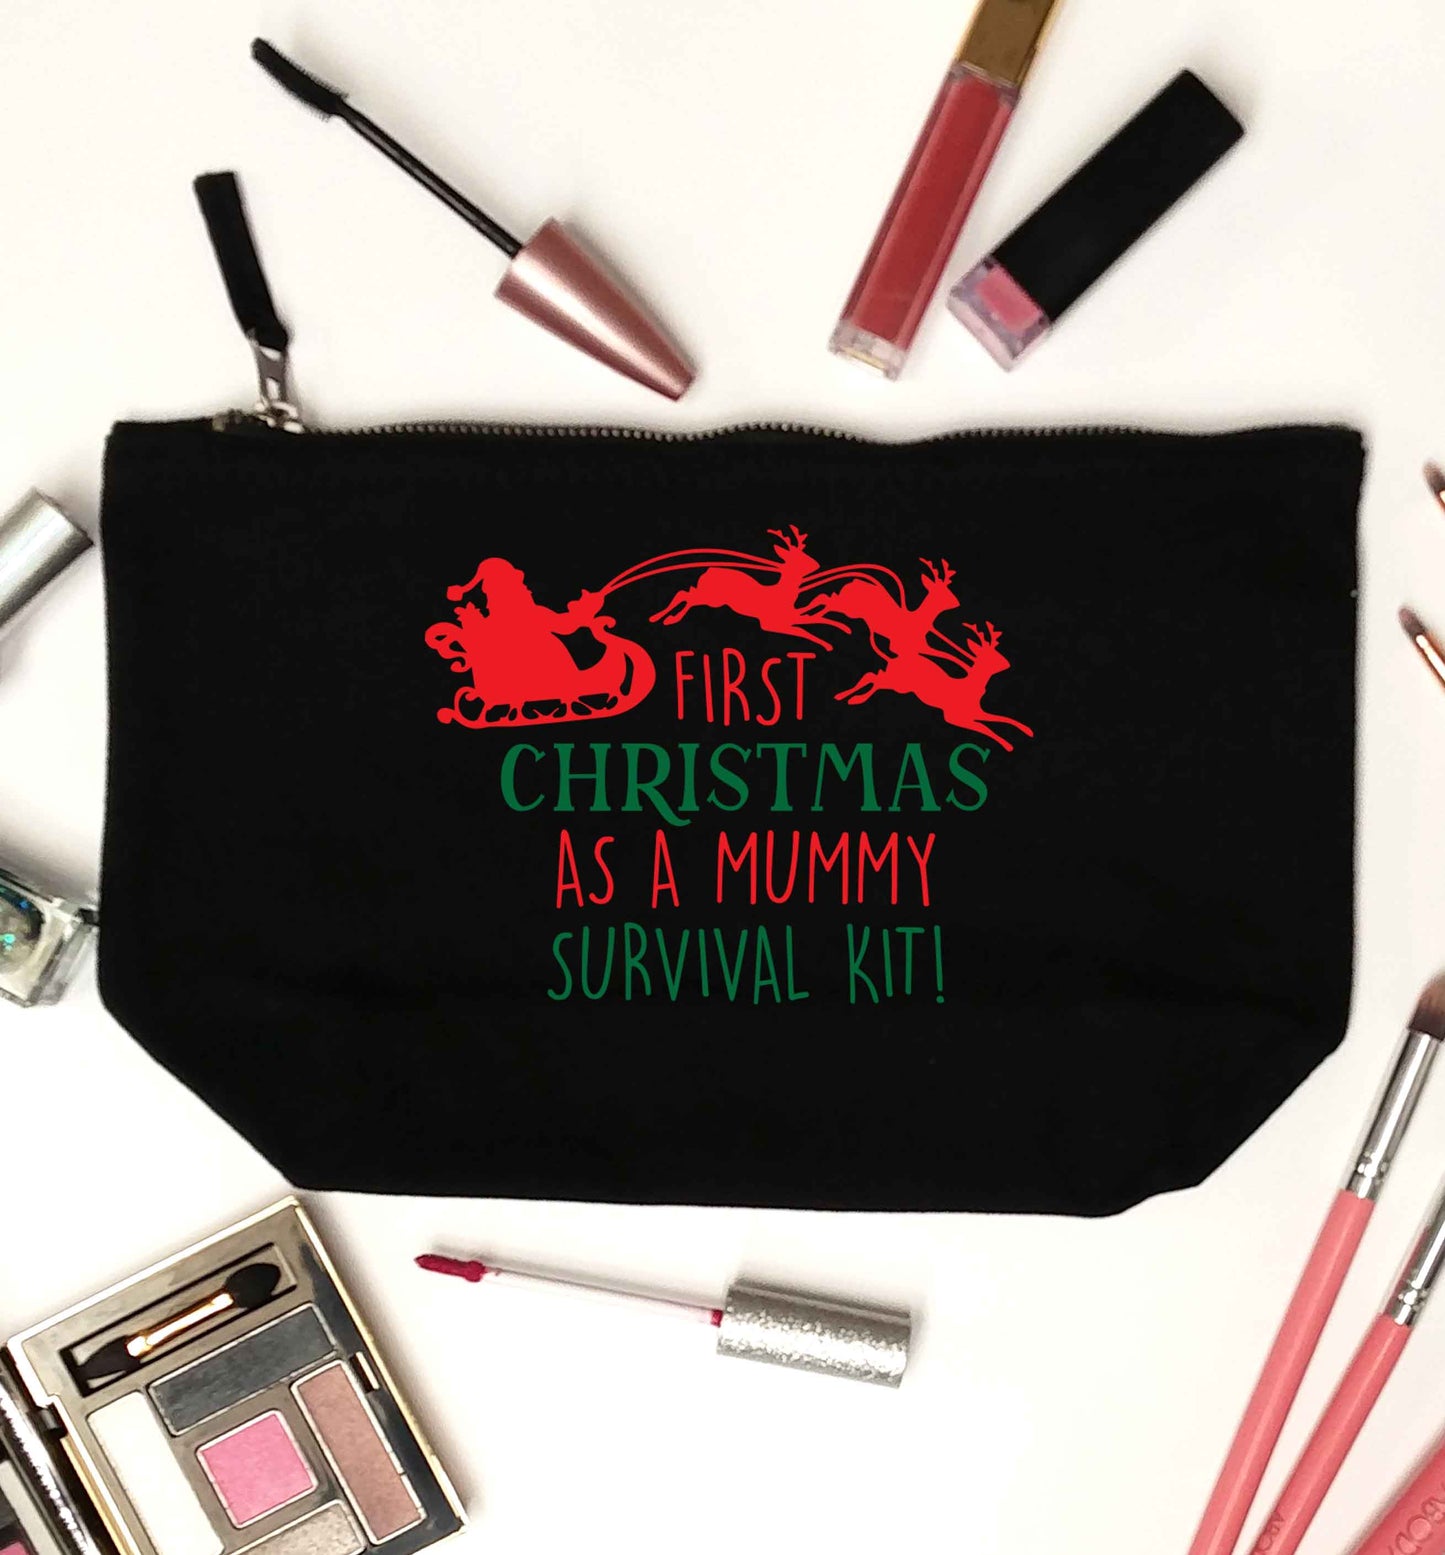 First Christmas as a mummy survival kit black makeup bag